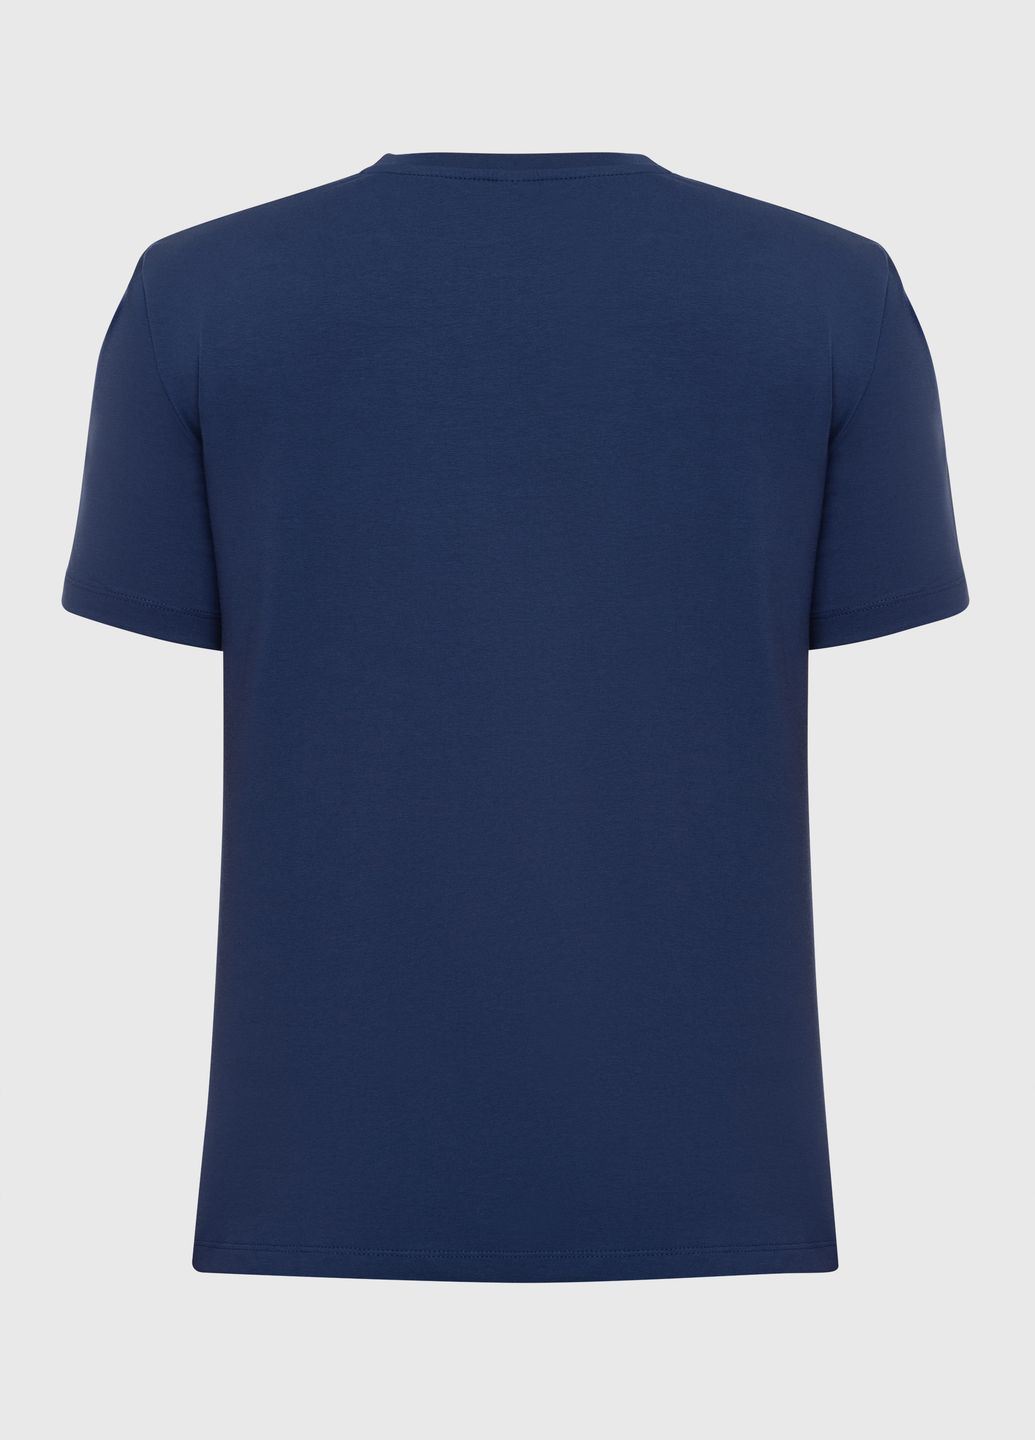 Синя футболка чоловіча базова, електрик German Volf